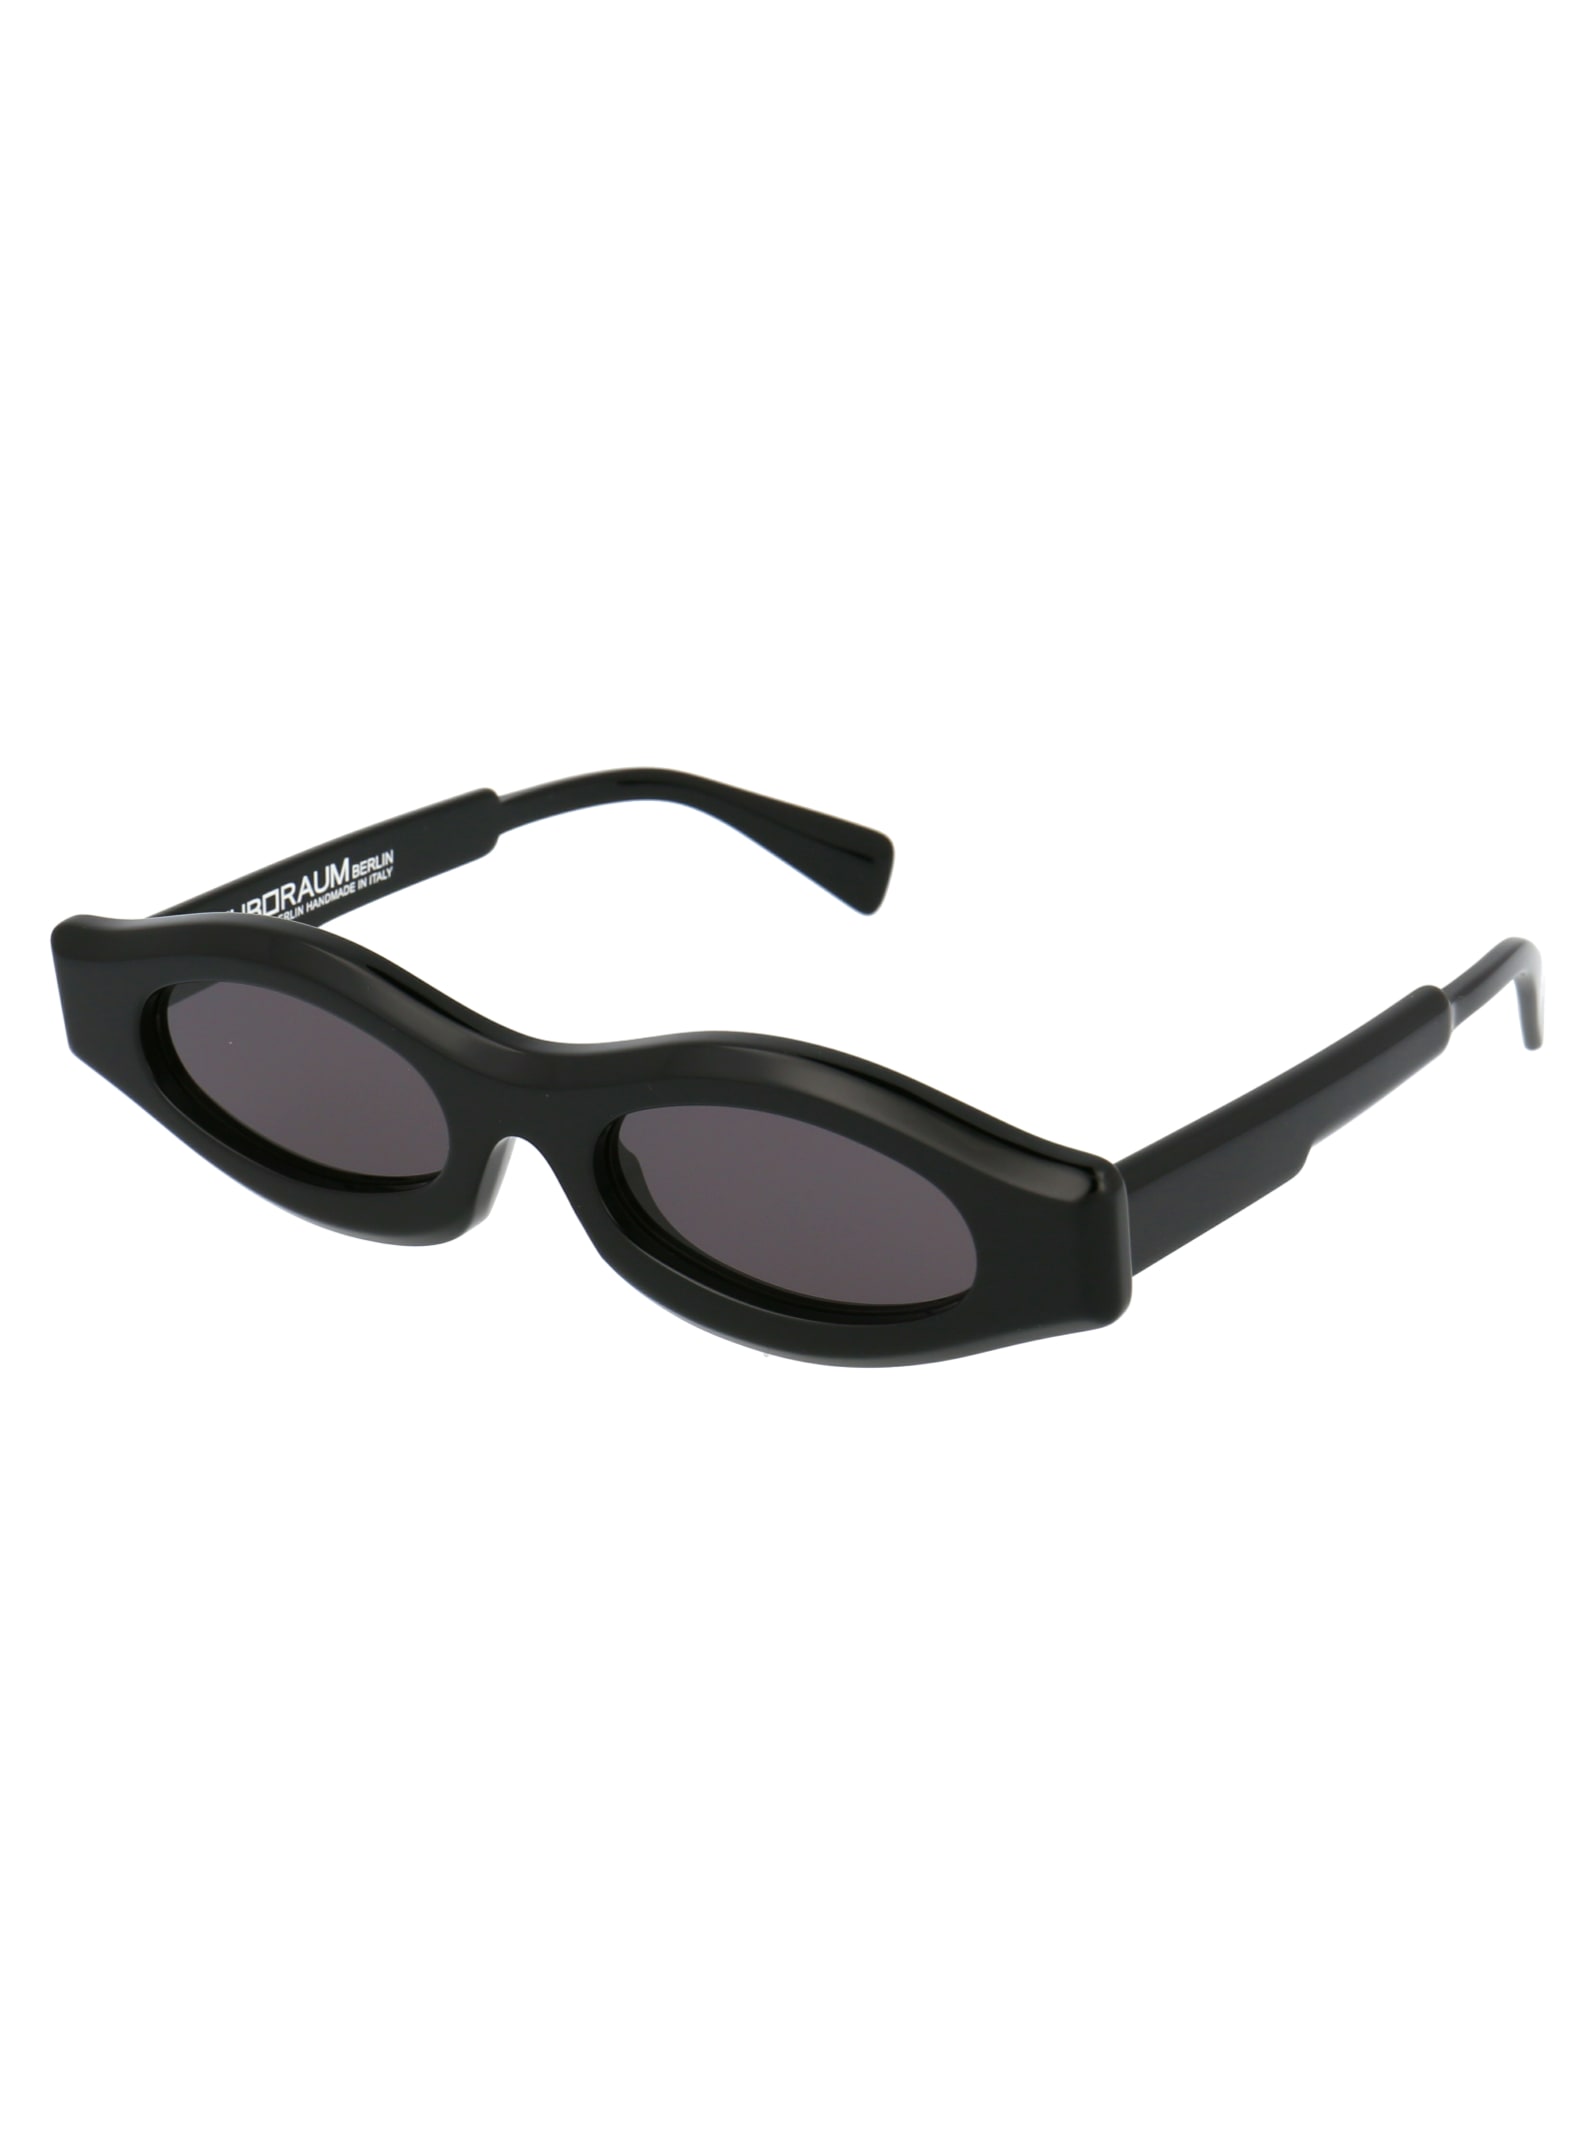 Shop Kuboraum Maske Y5 Sunglasses In Bs 2gray